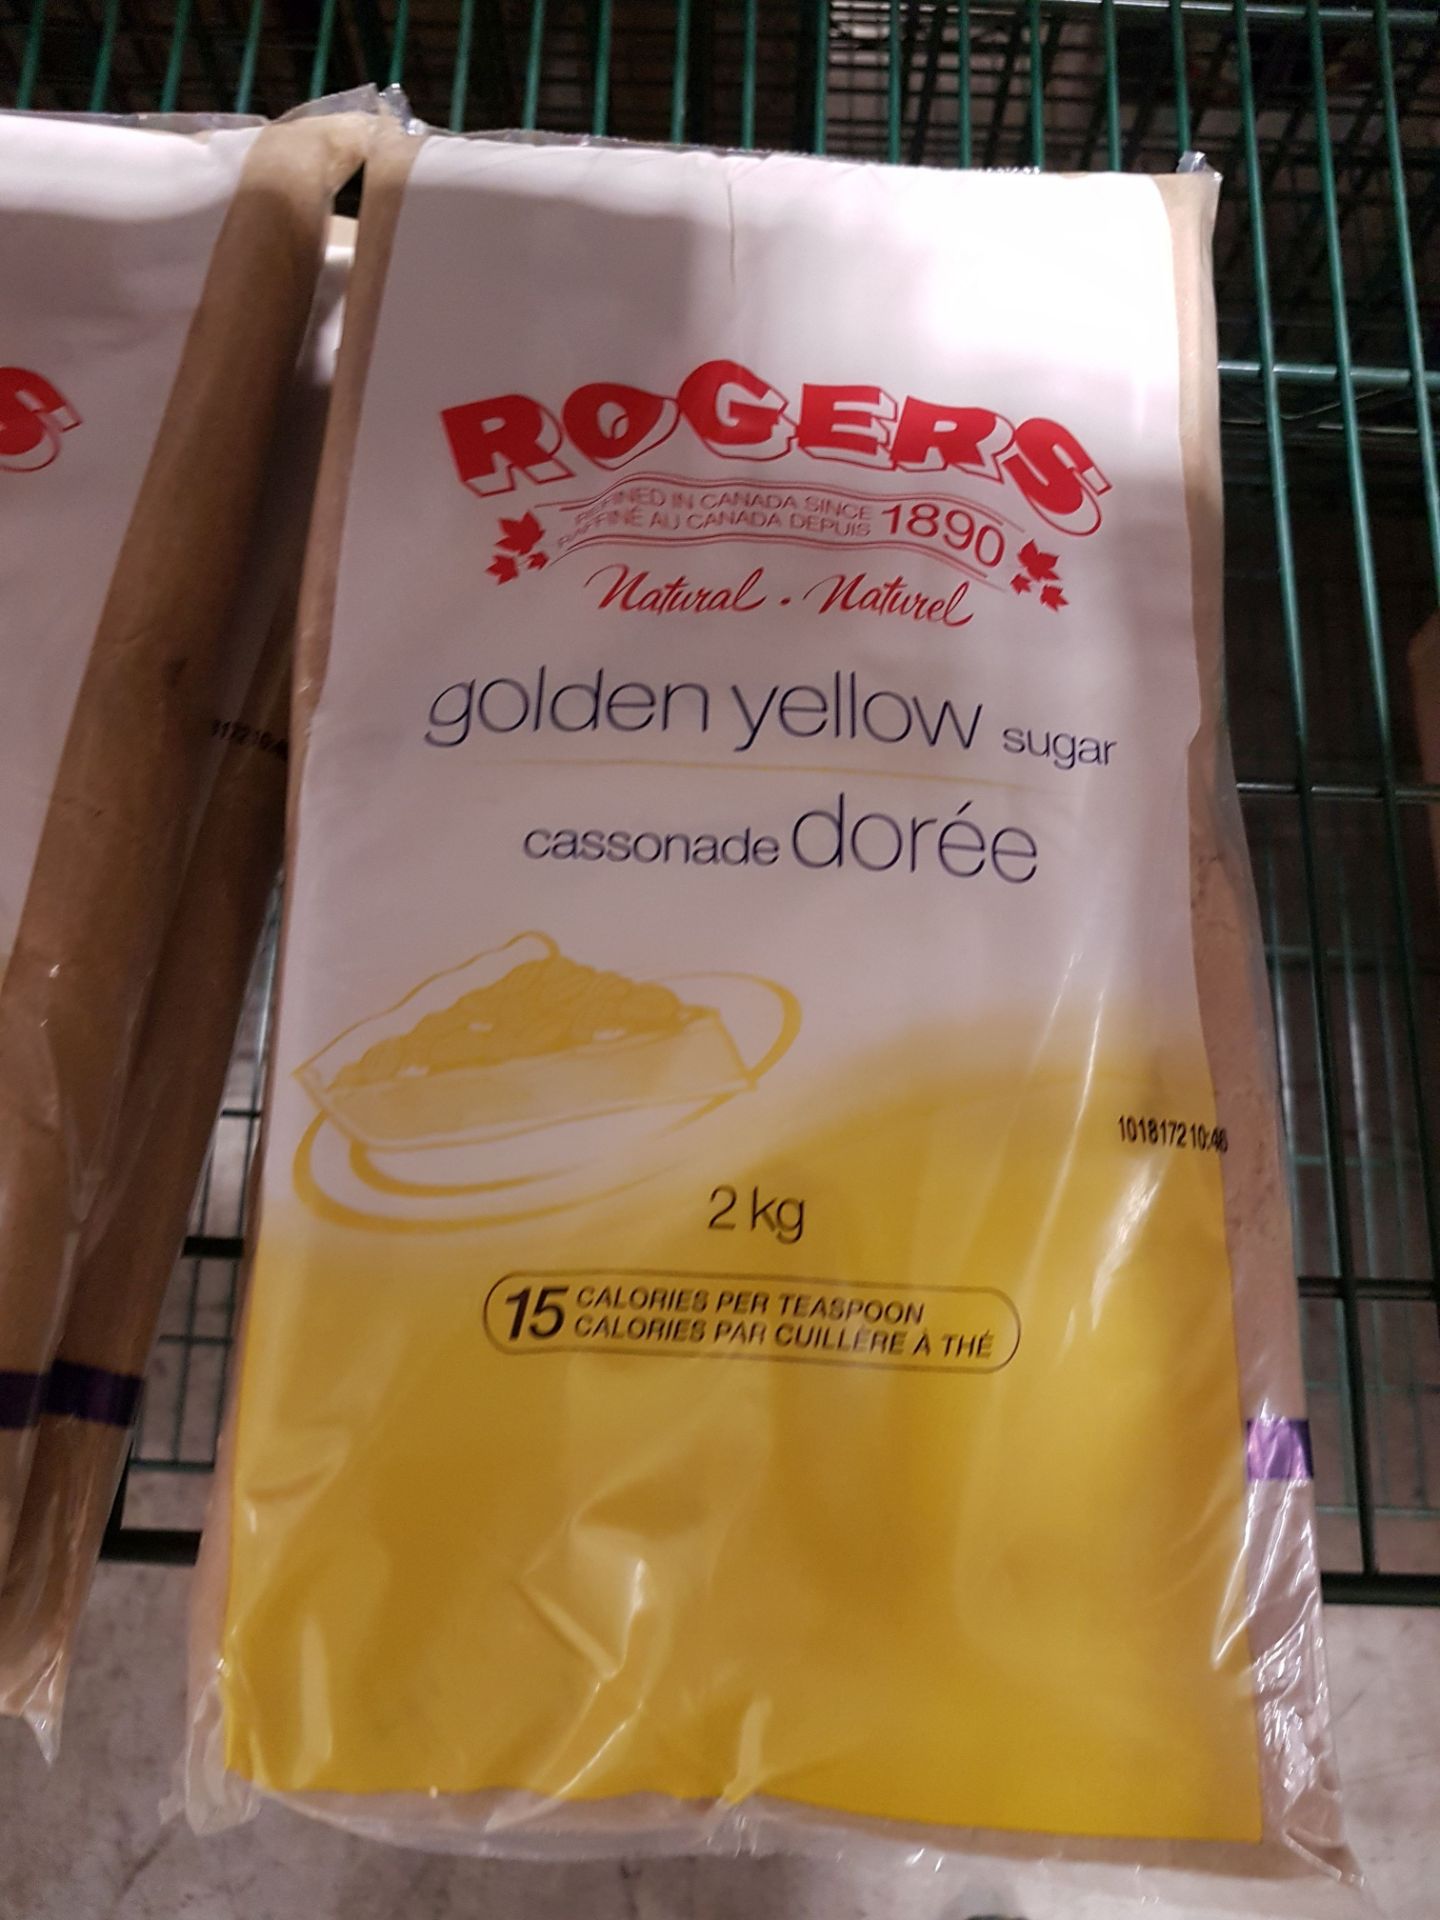 Roger's Golden Yellow Sugar - 4 x 2 kg bags